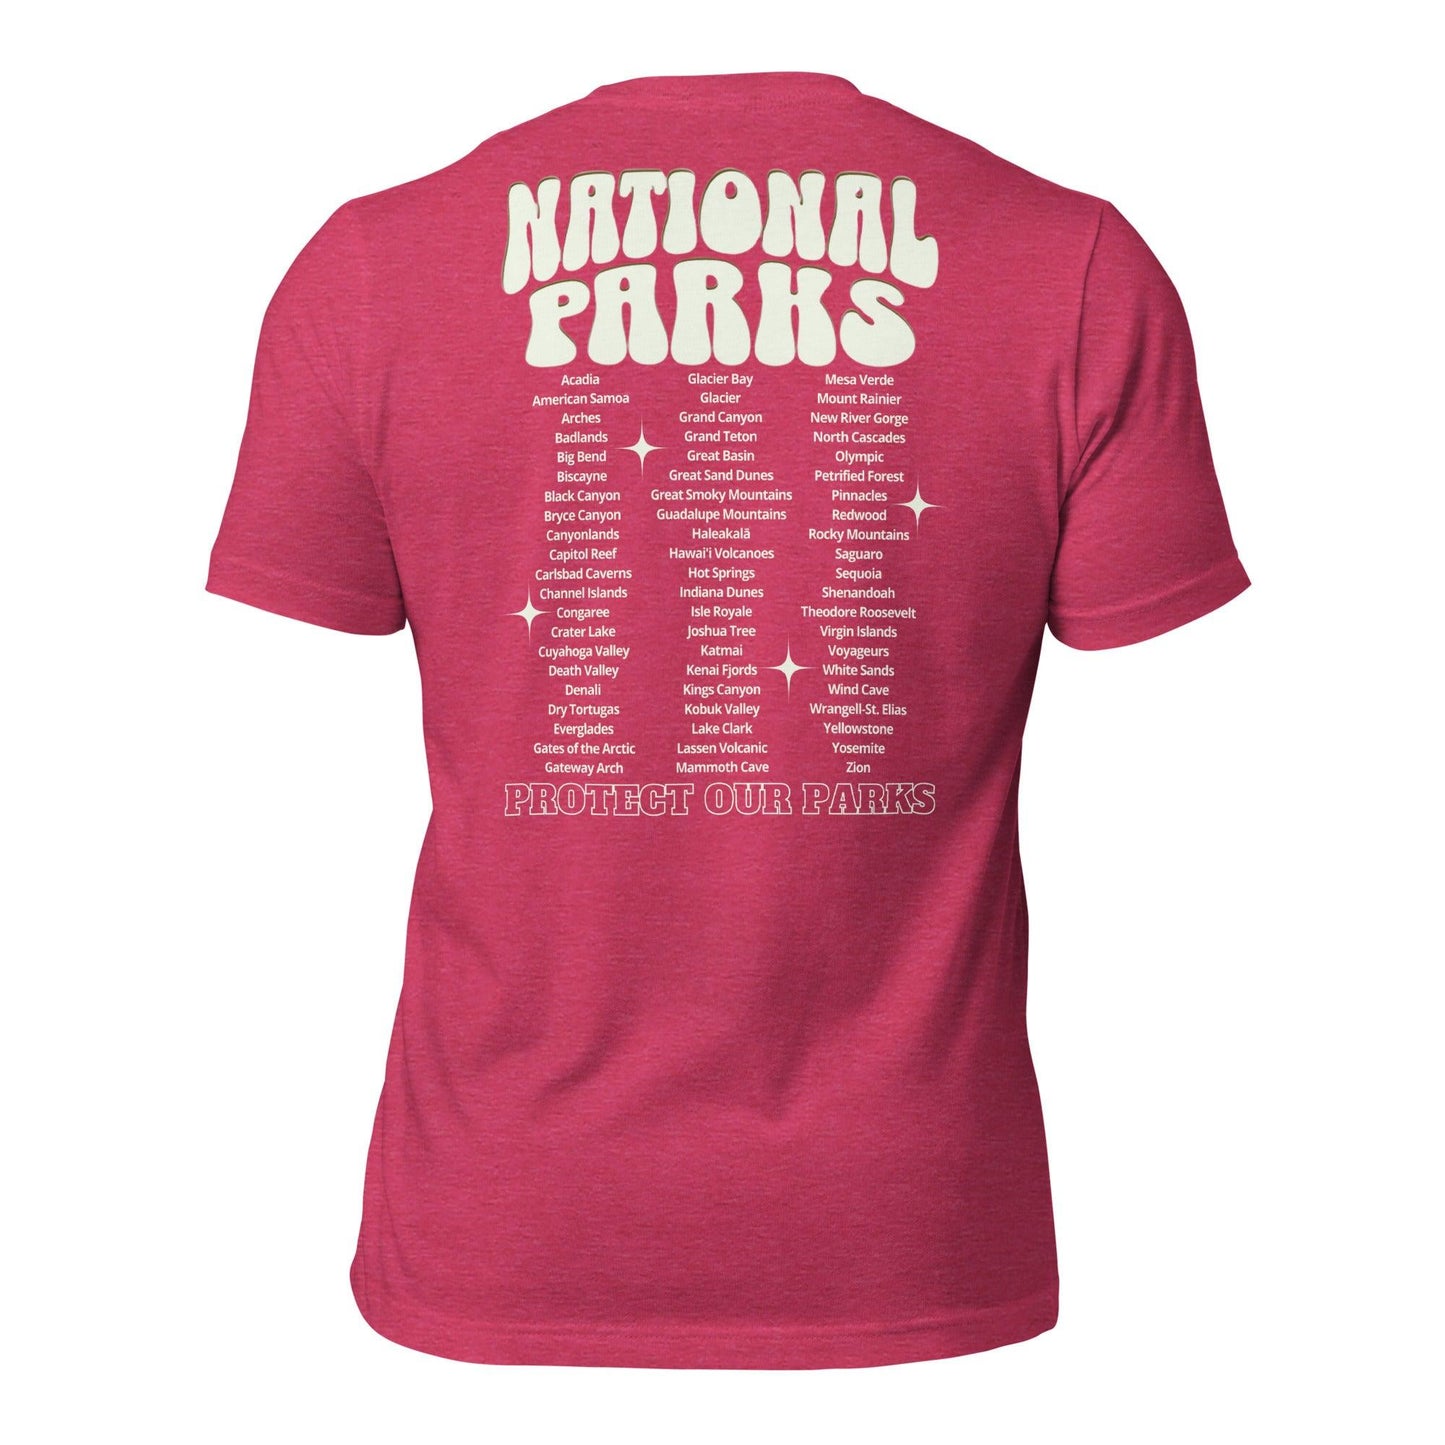 63 U.S. National Parks T-Shirt - Adventure Threads Company